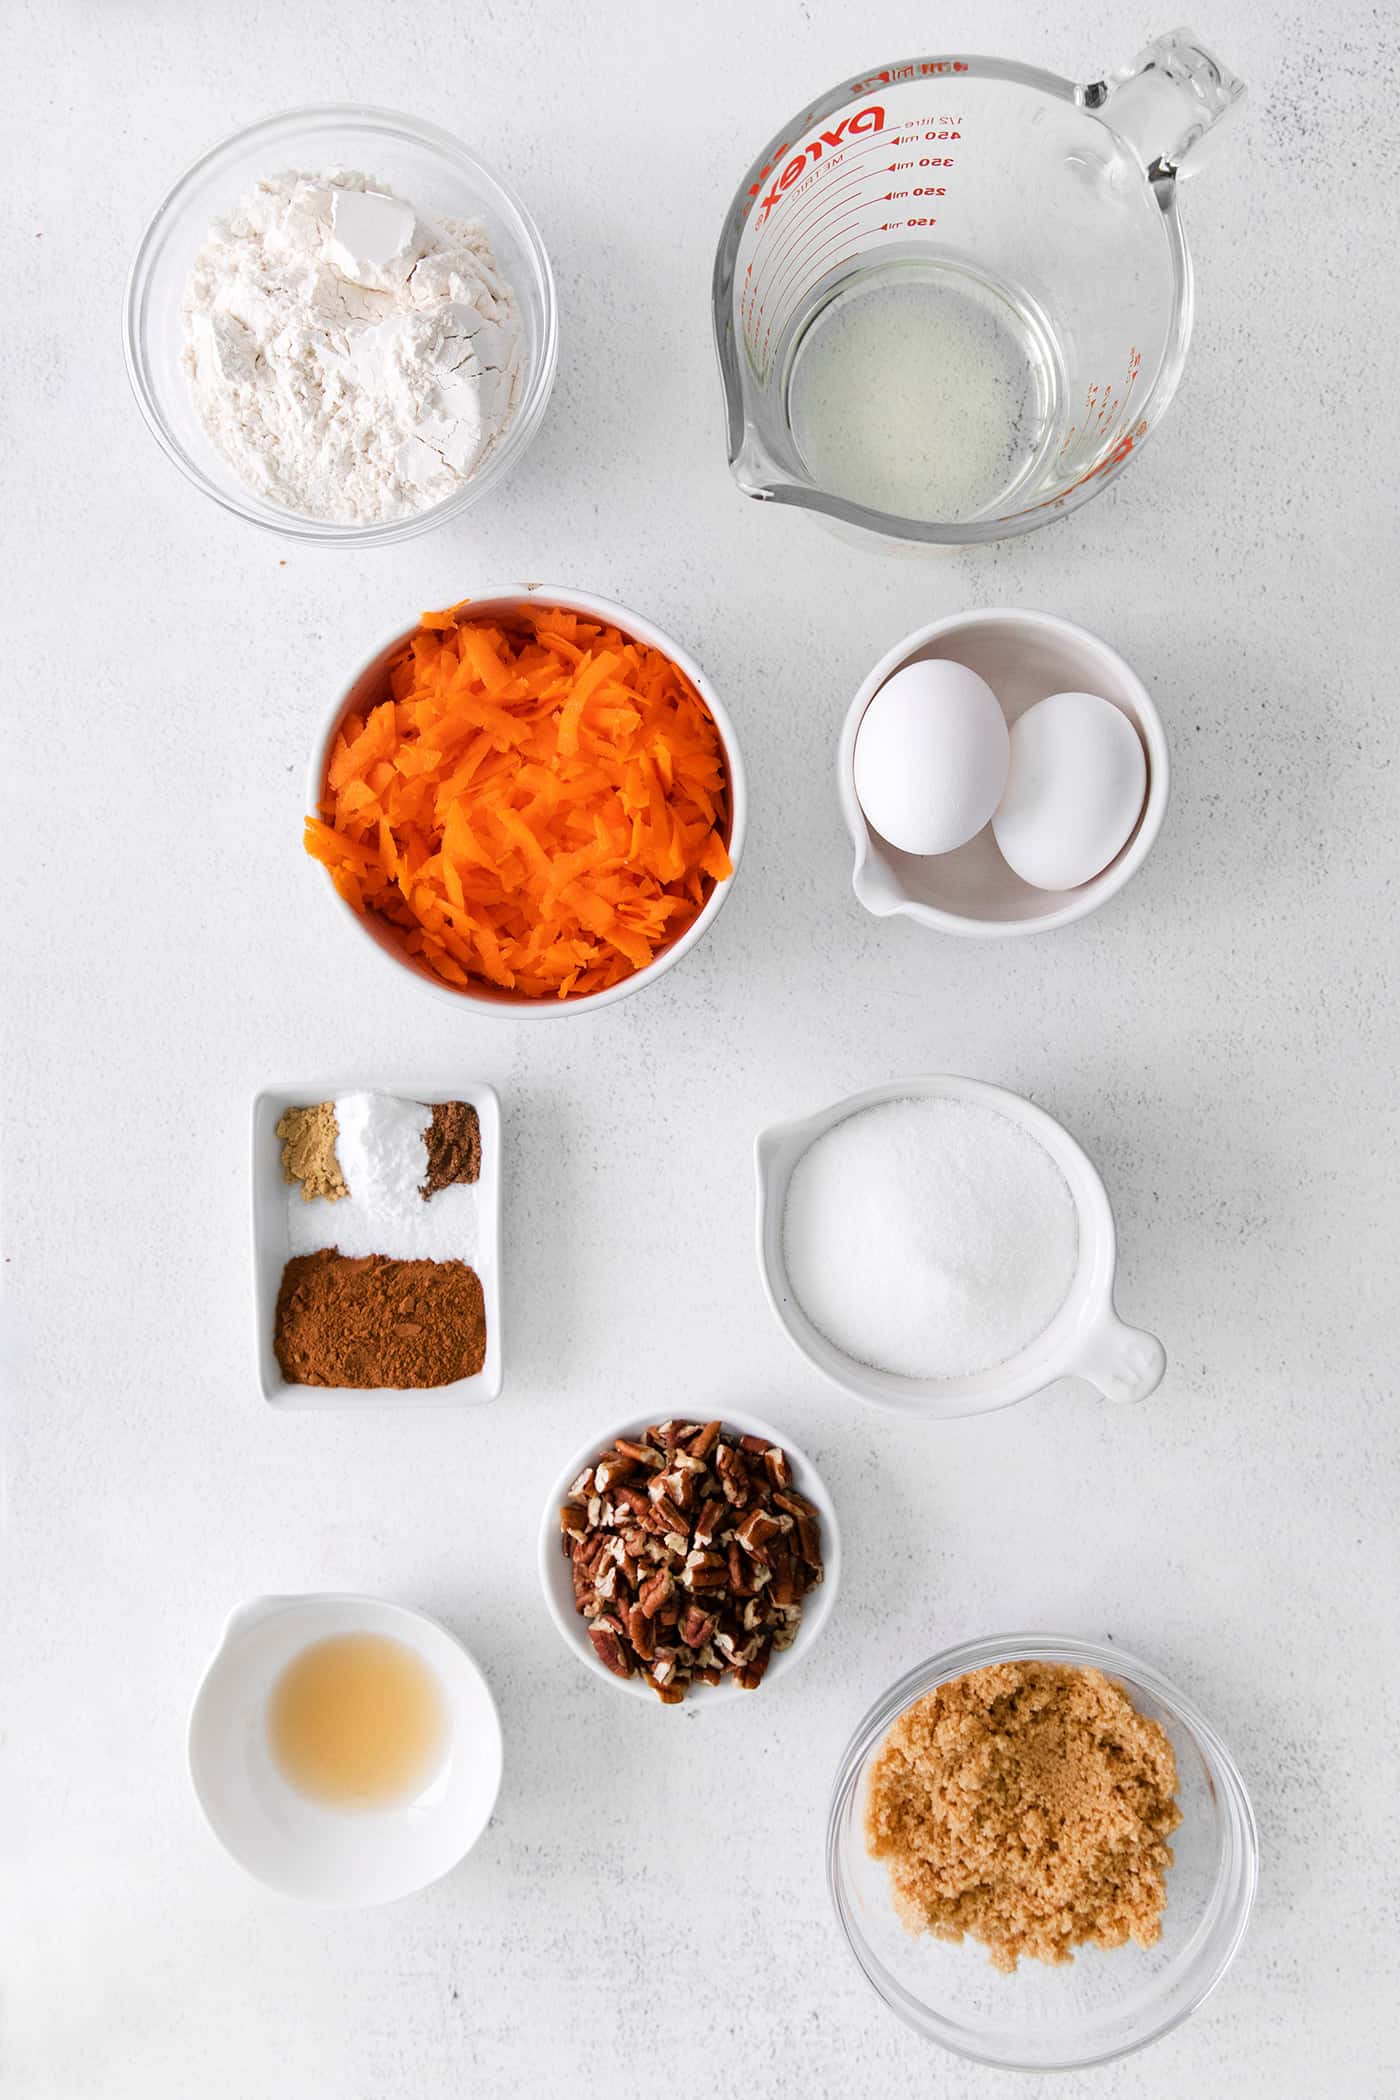 Homemade carrot cake ingredients